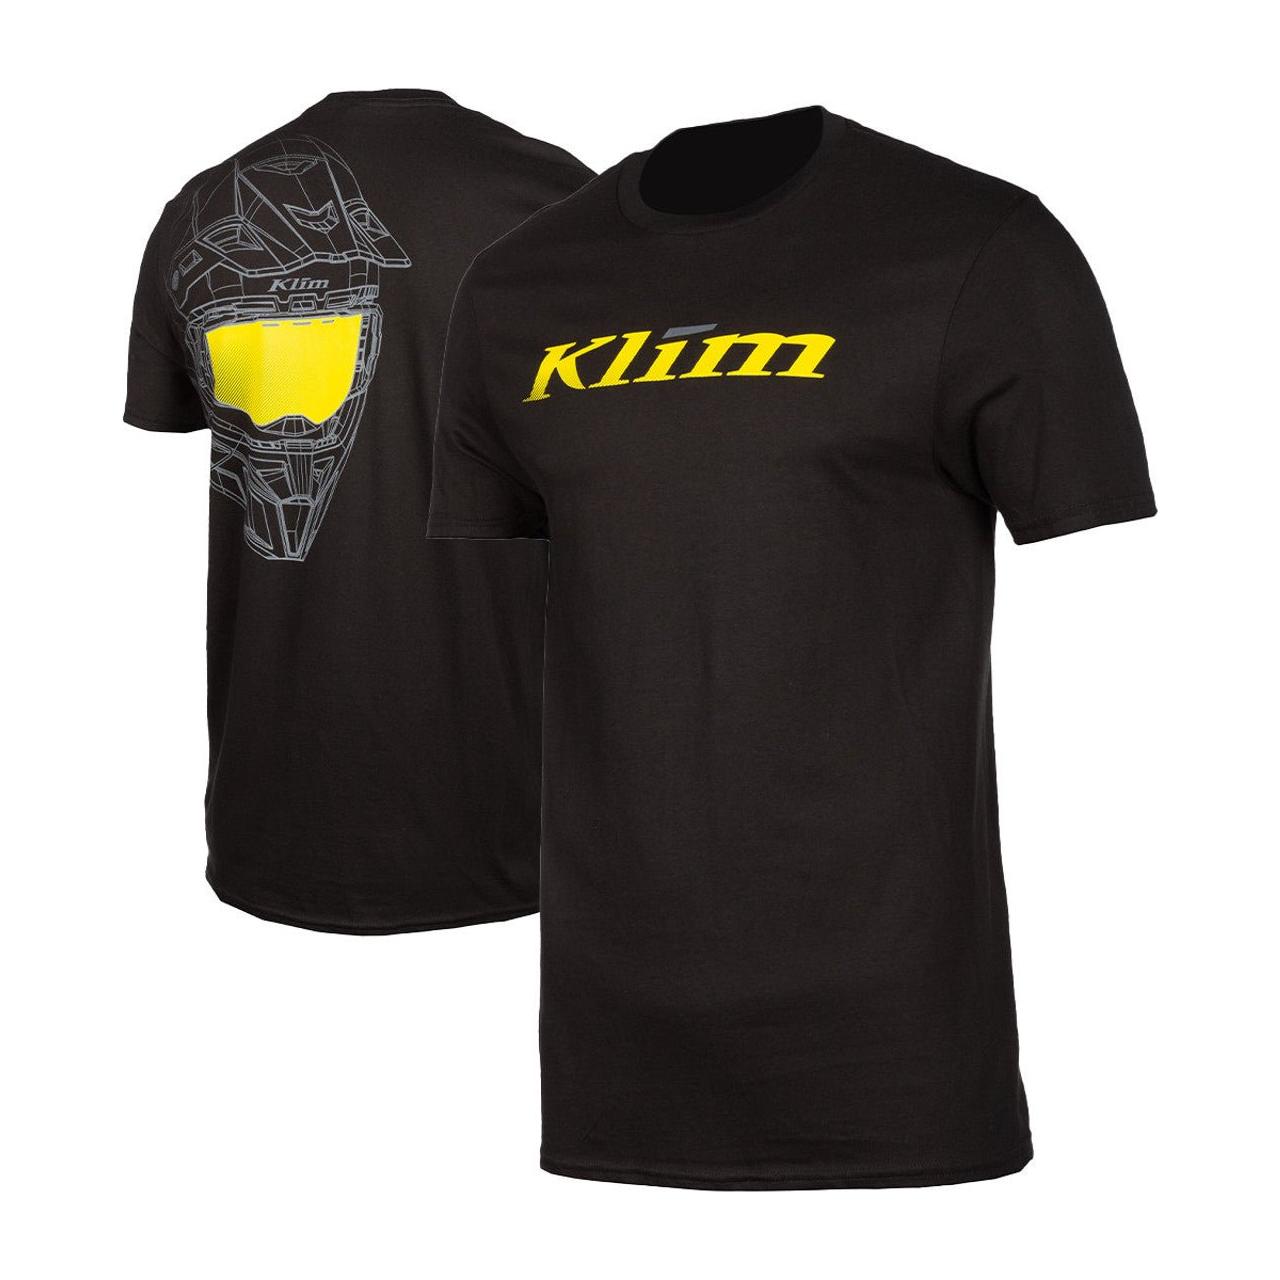 Klim t-shirt "Draft" - EdTools